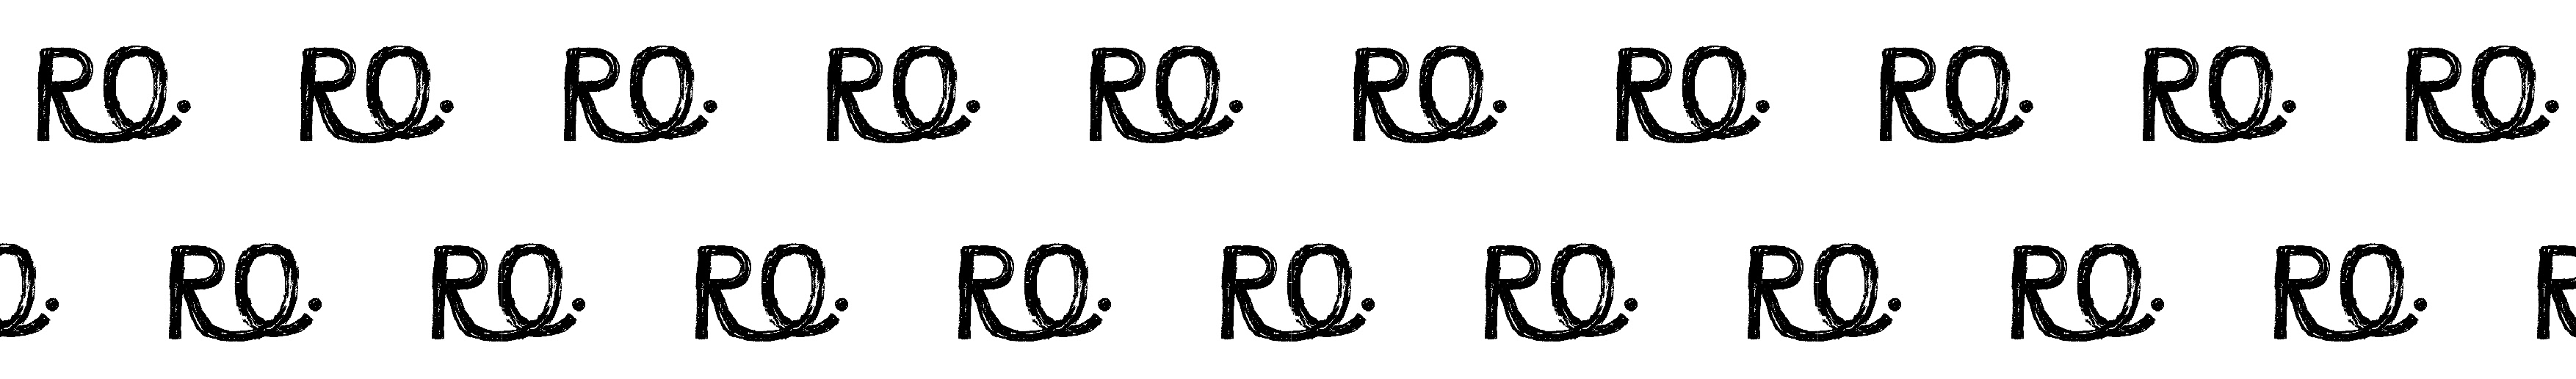 Baner profilu użytkownika RO Designs